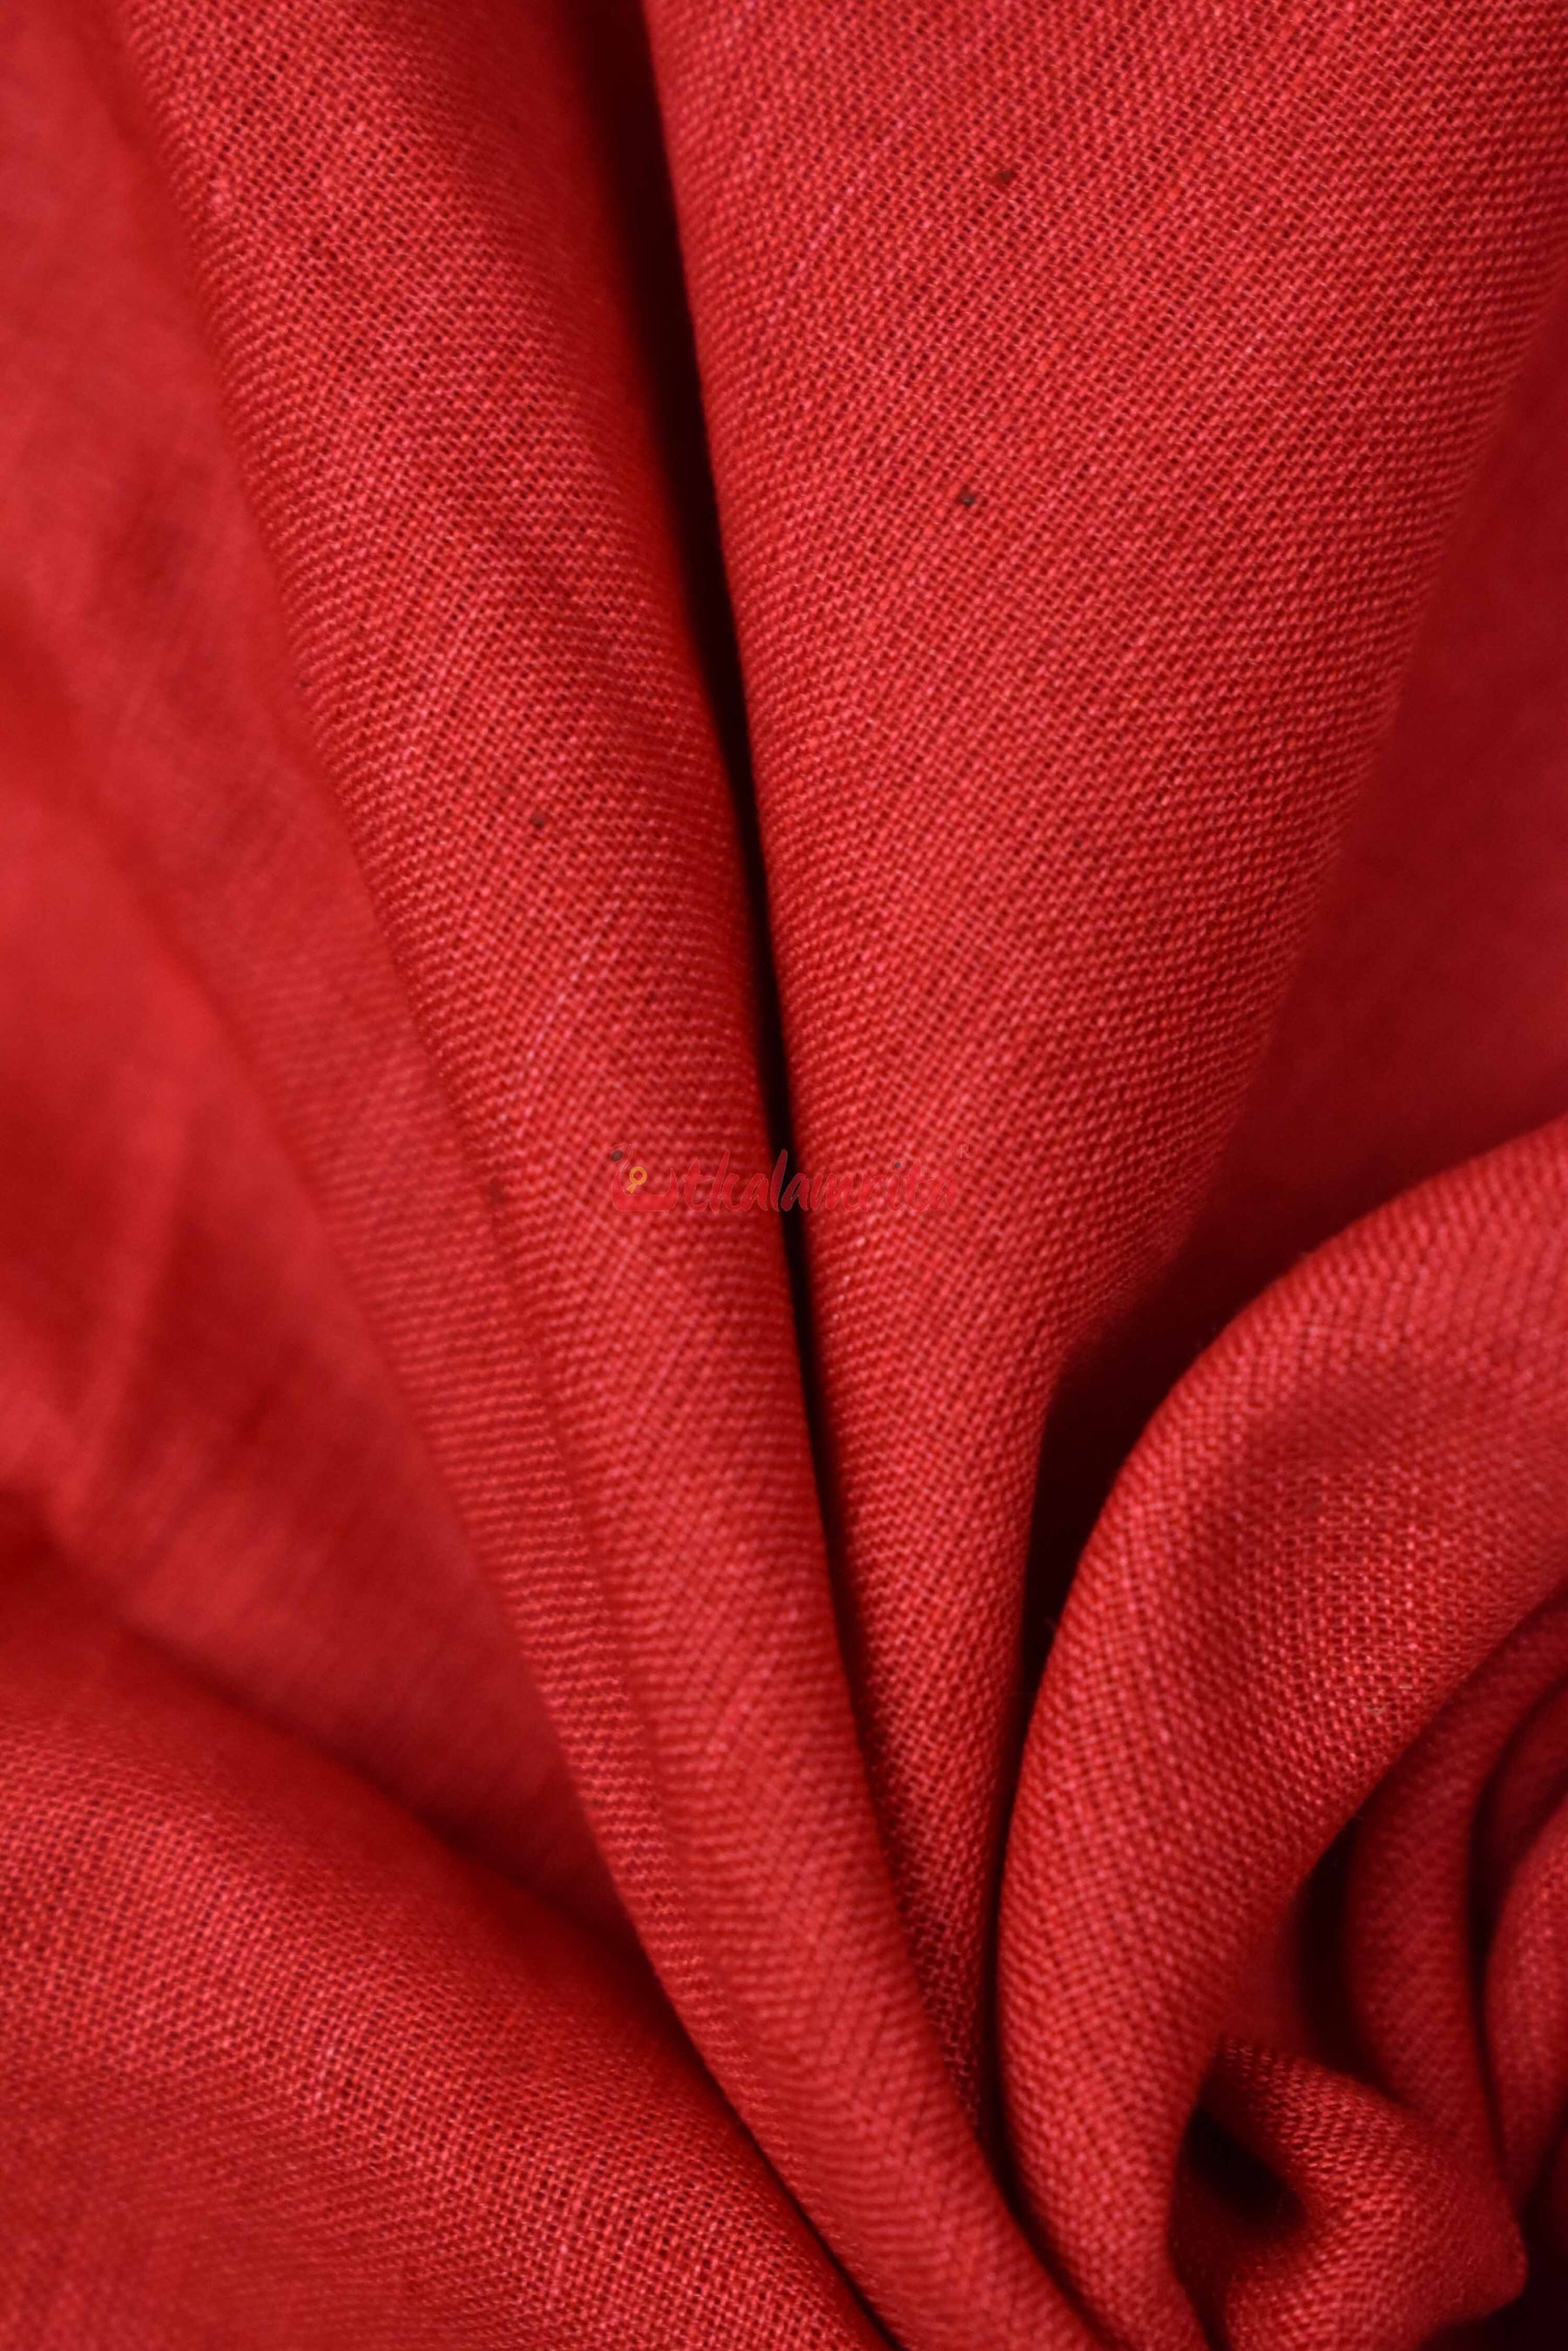 Plain Red Handloom (Fabric)